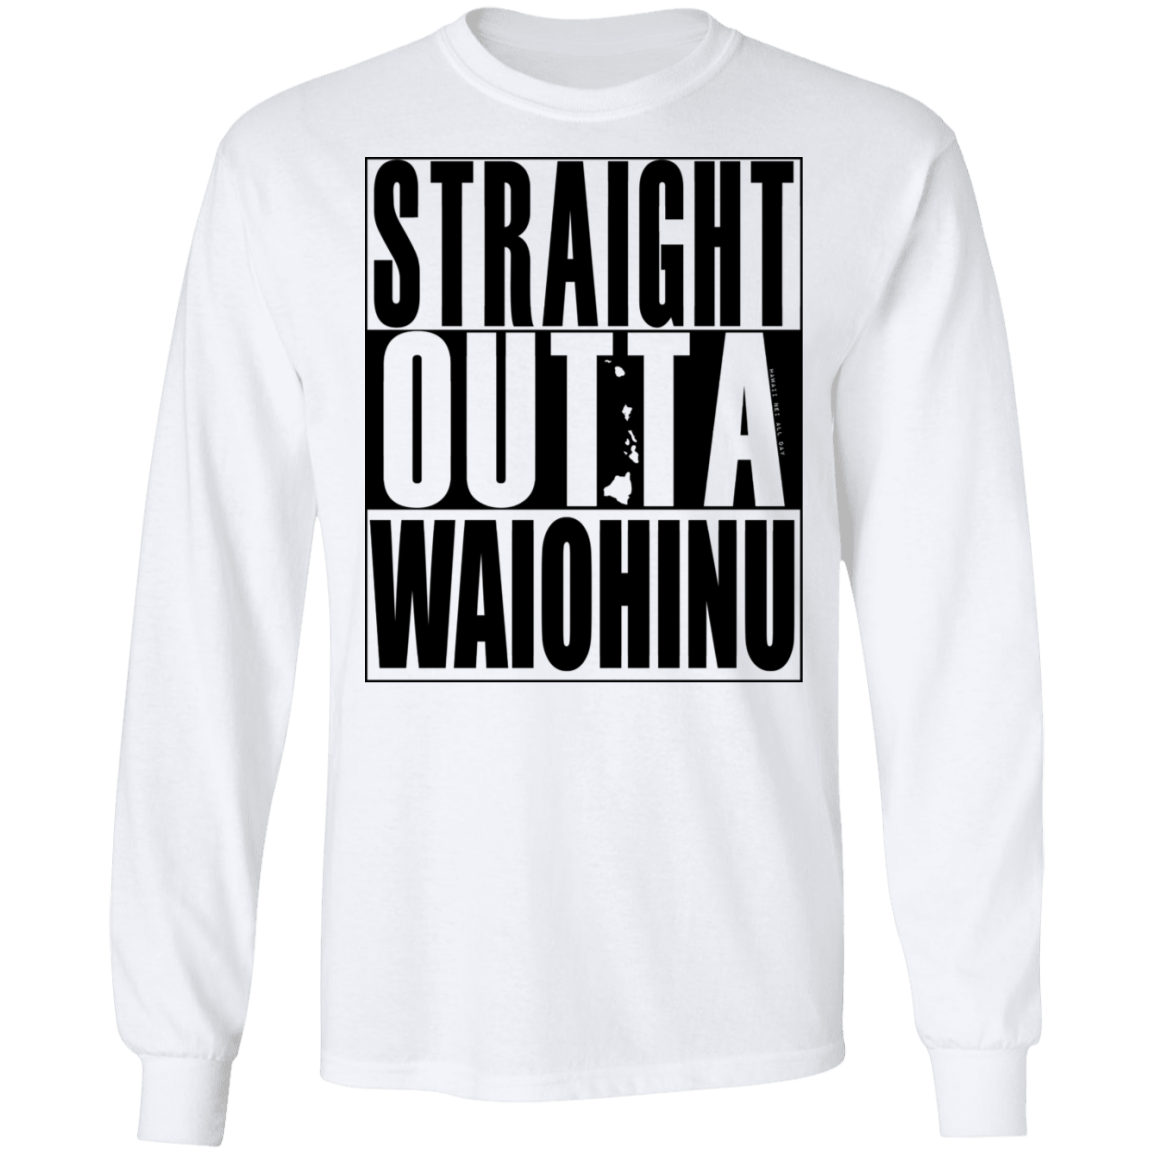 Straight Outta Waiohinu (black ink) LS T-Shirt